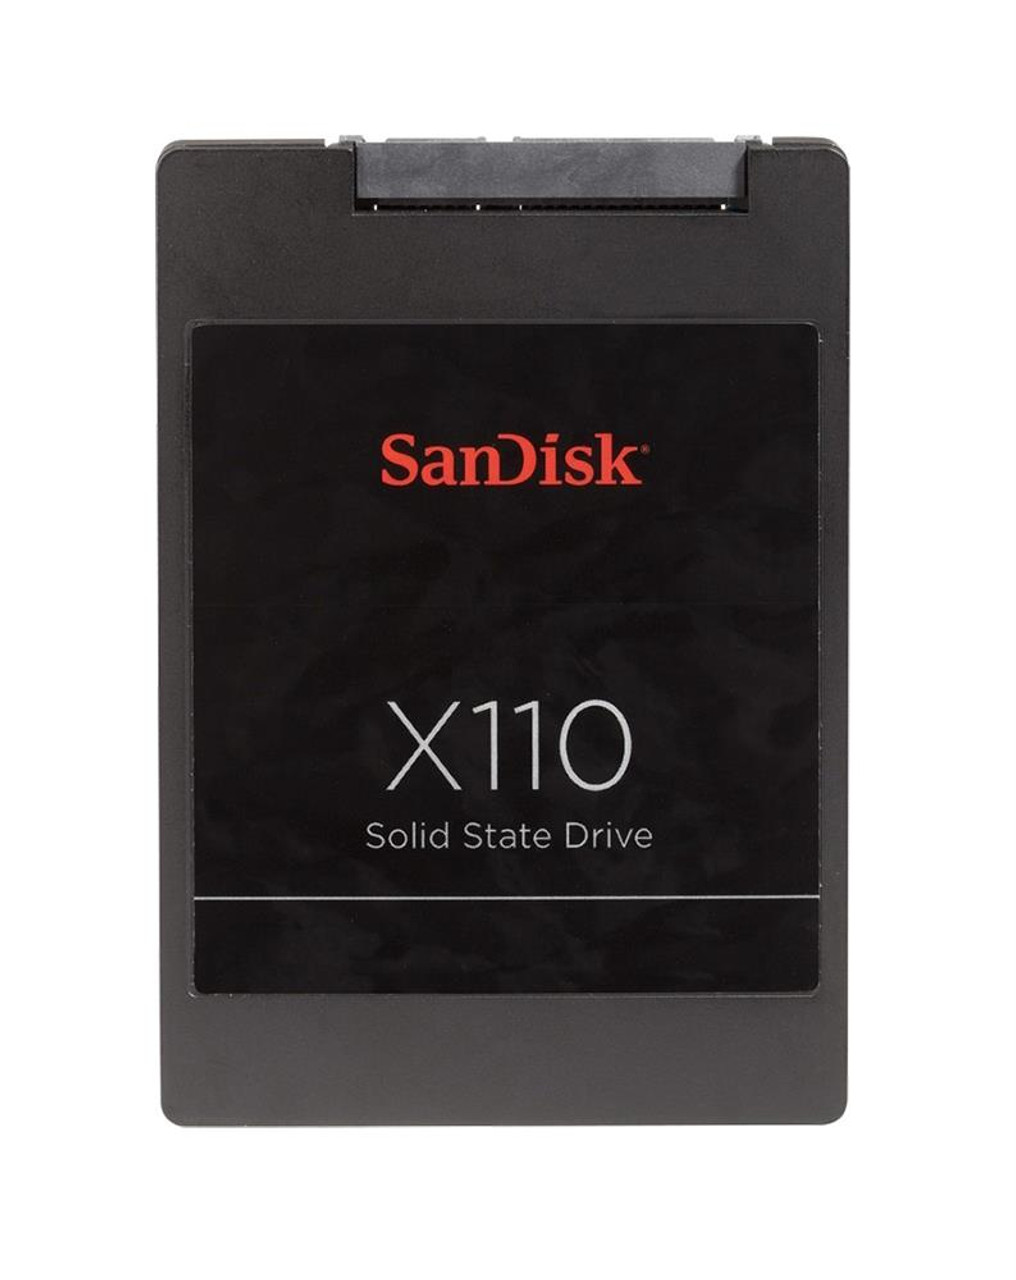 SD6SB1M-064G SanDisk X110 64GB MLC SATA 6Gbps 2.5-inch Internal Solid State Drive (SSD)